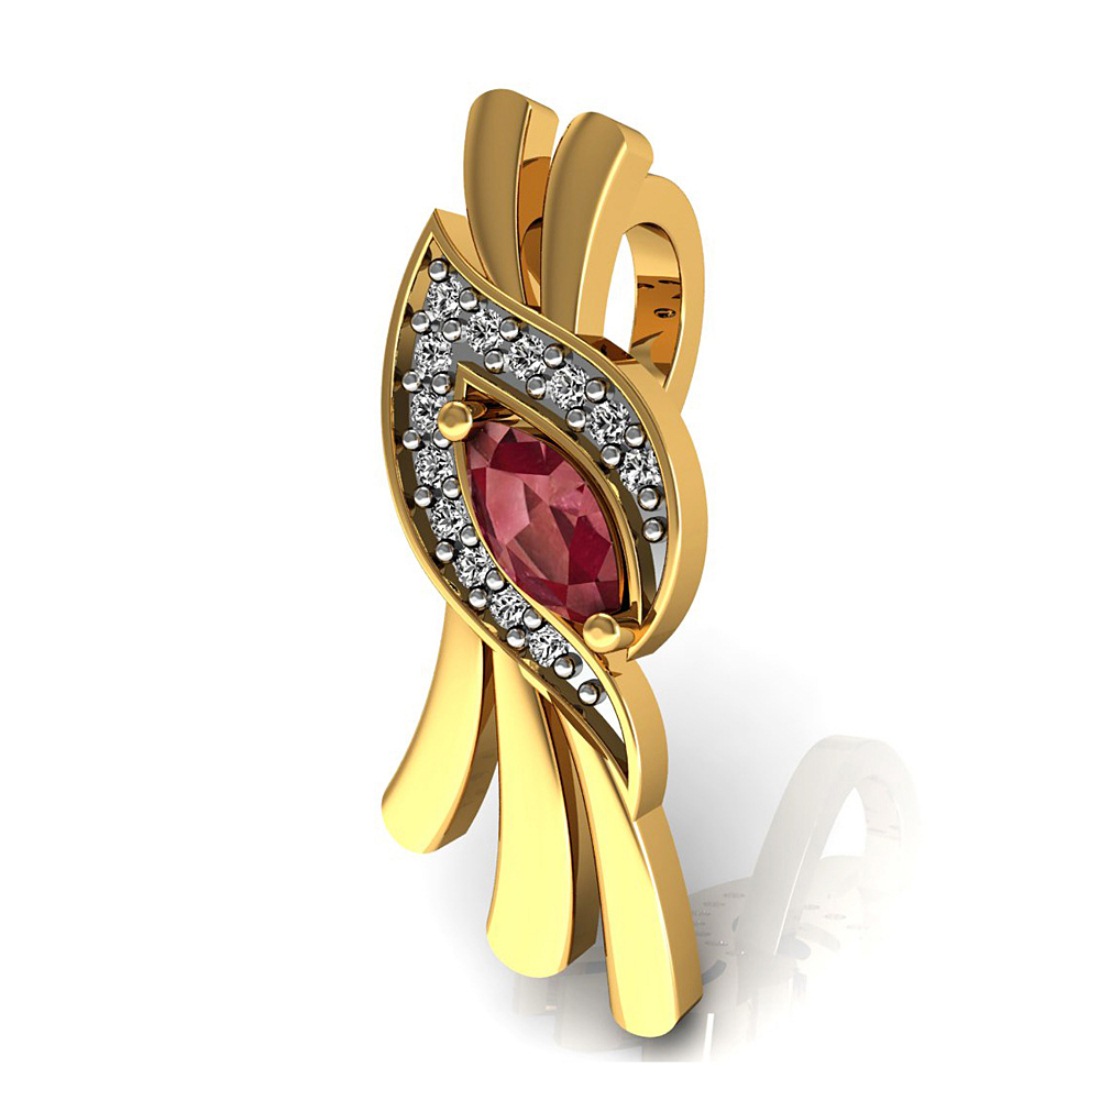 Stylish Gold Pendant with Diamond